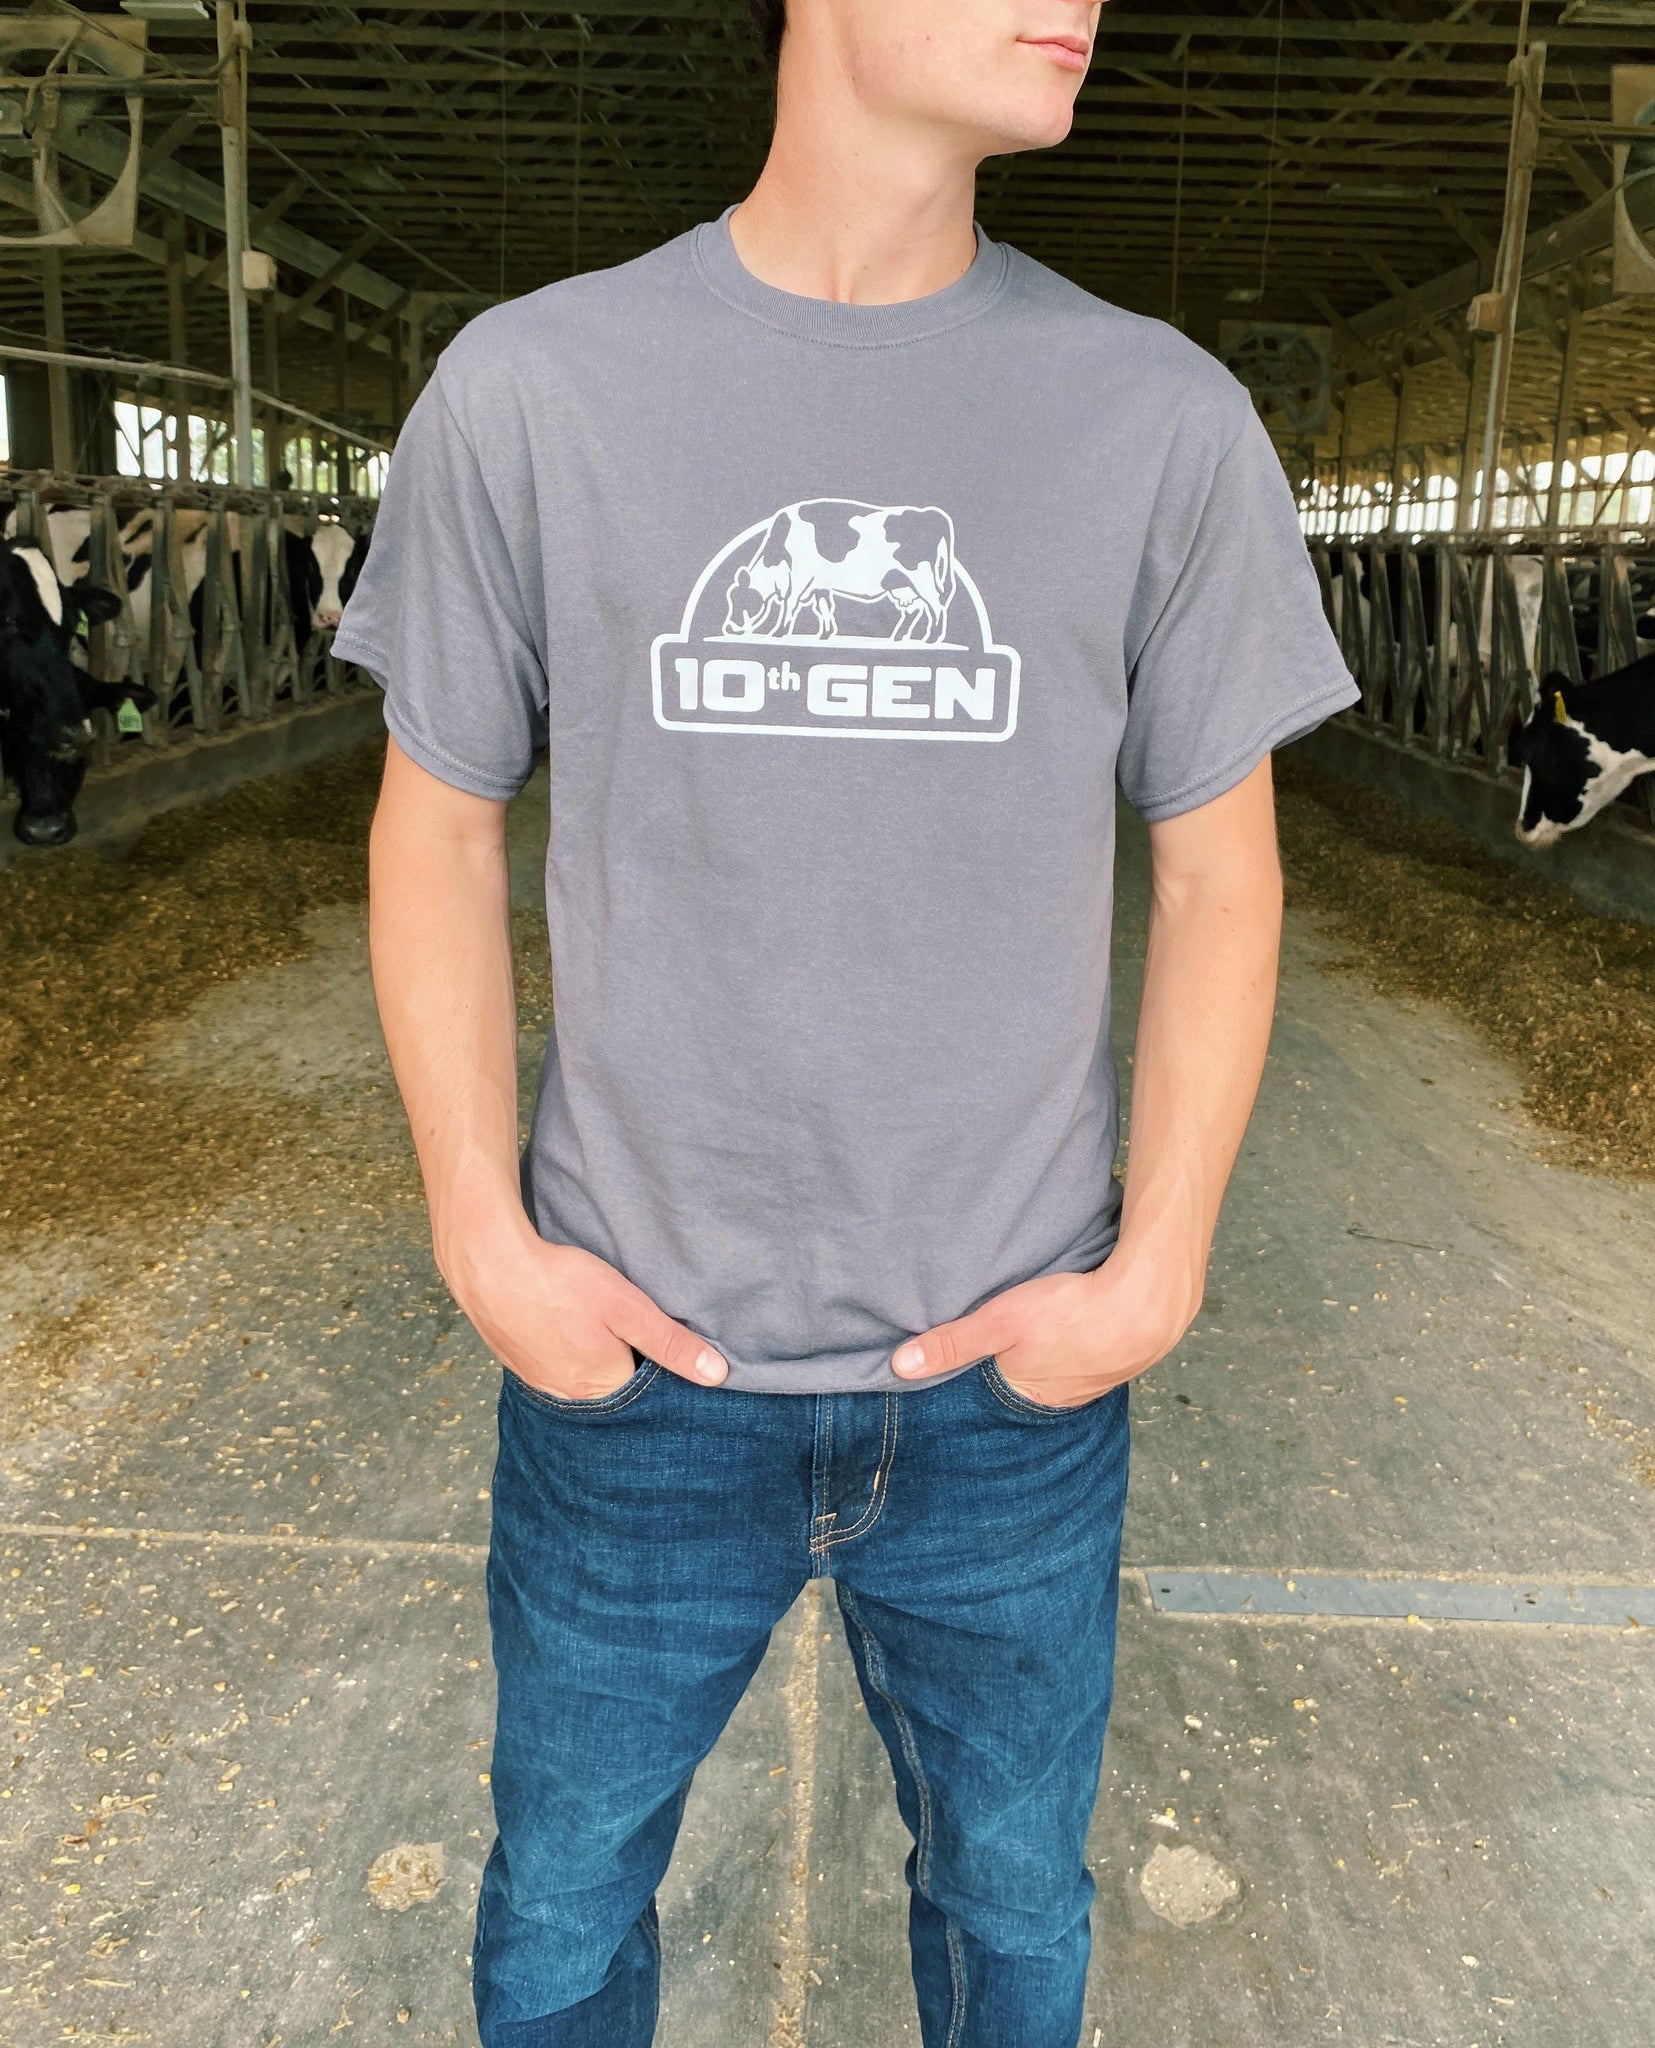 10th Gen T-shirt – Generation Dairyman